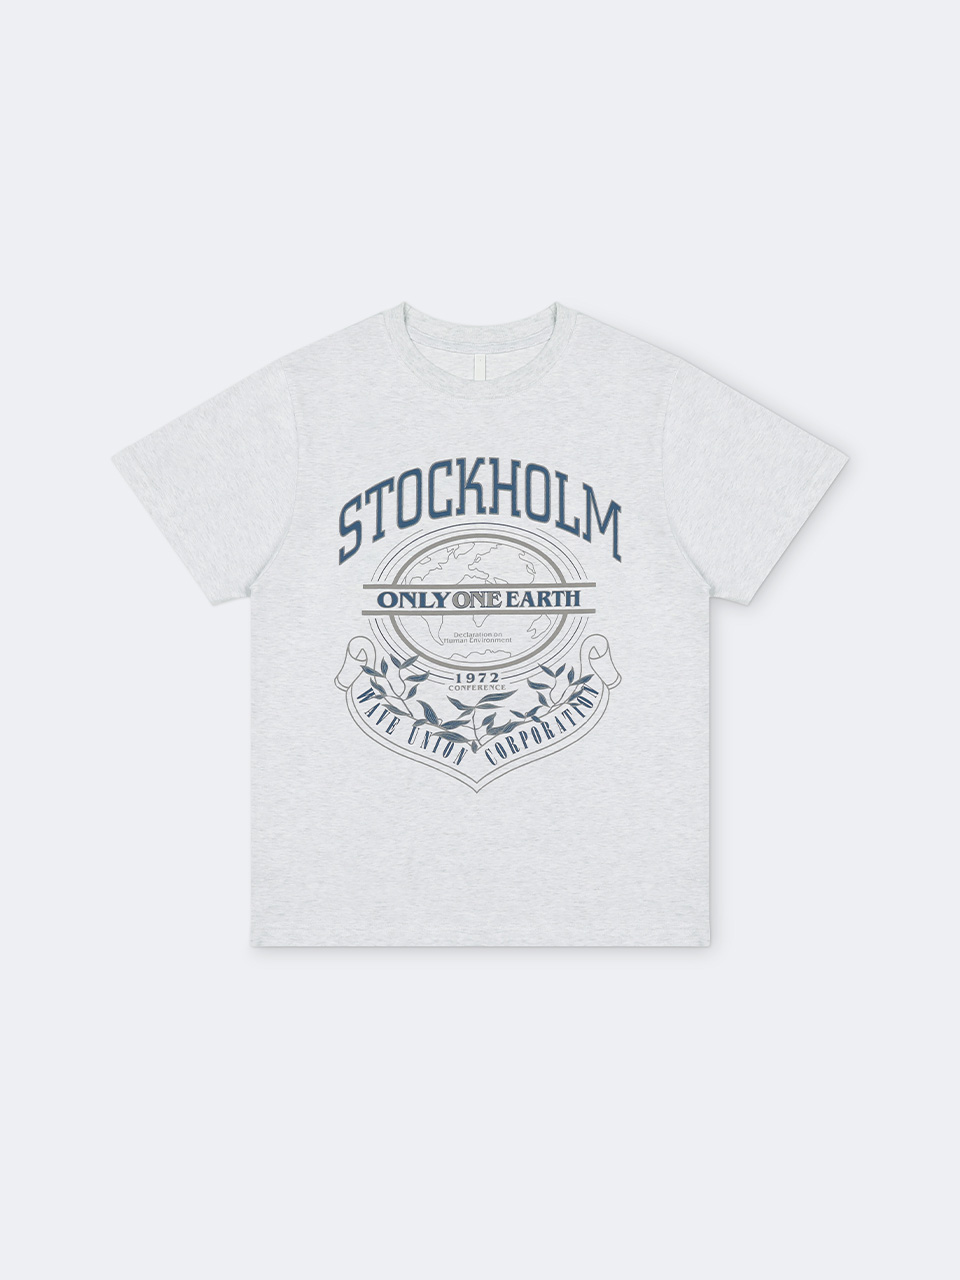 Stockholm T-shirt heather gray